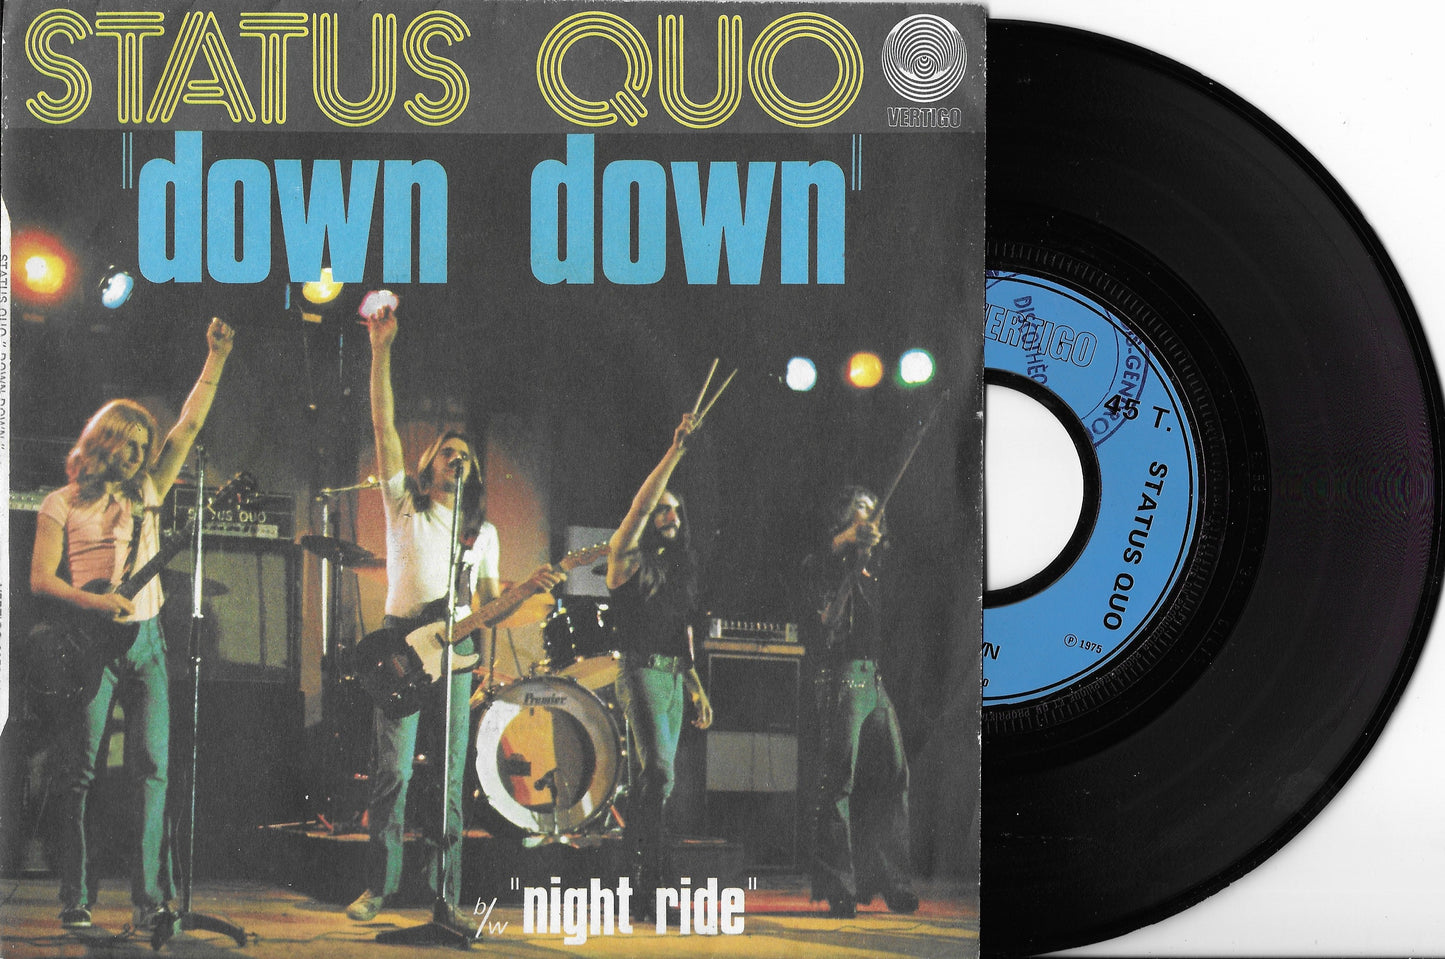 STATUS QUO - Down Down